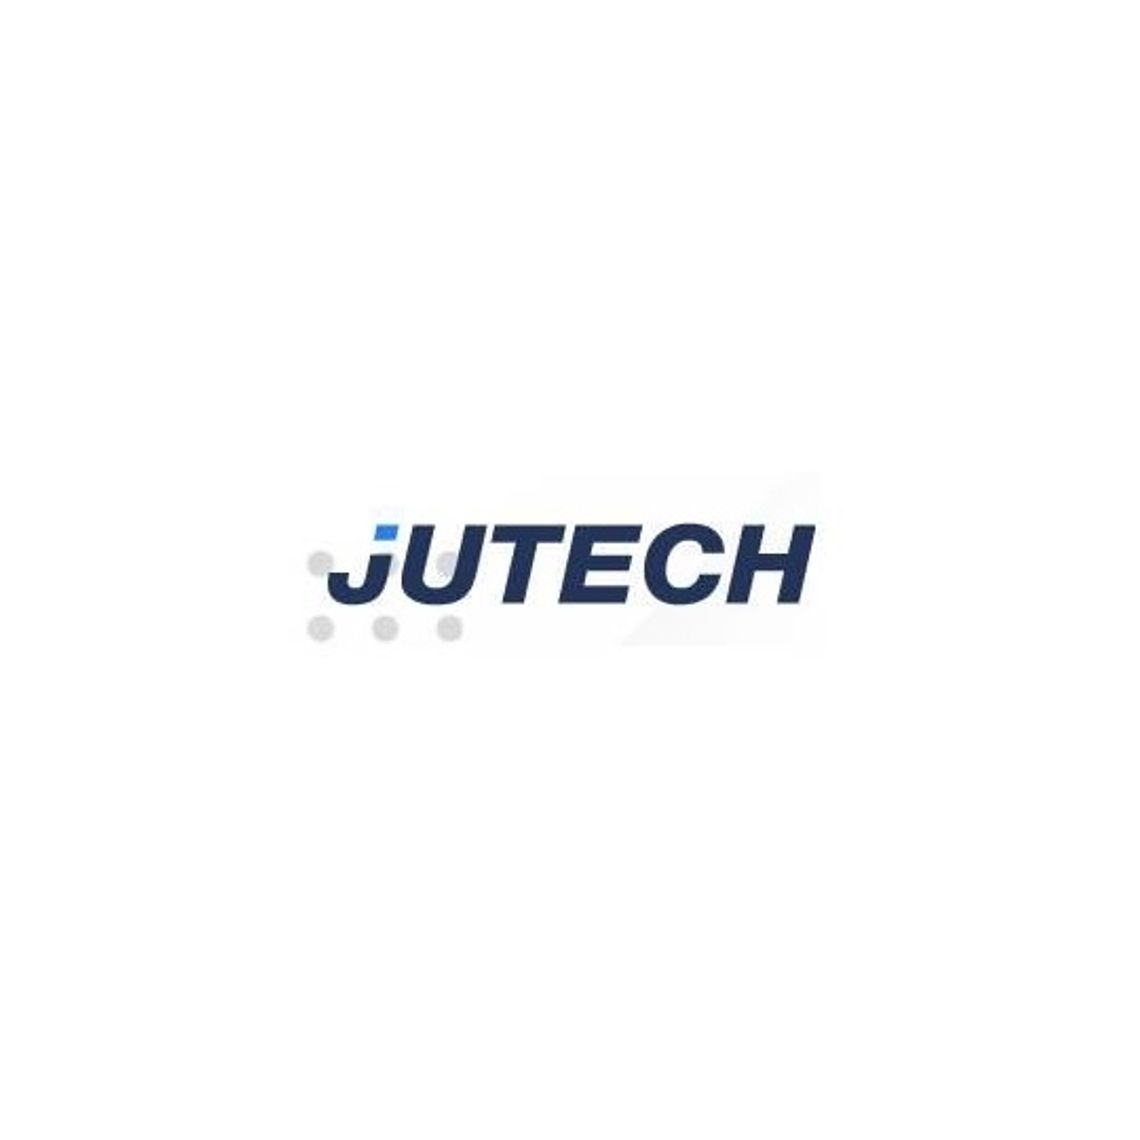 JUTECH - dystrybutor systemów Lincoln GmbH & Co. KG